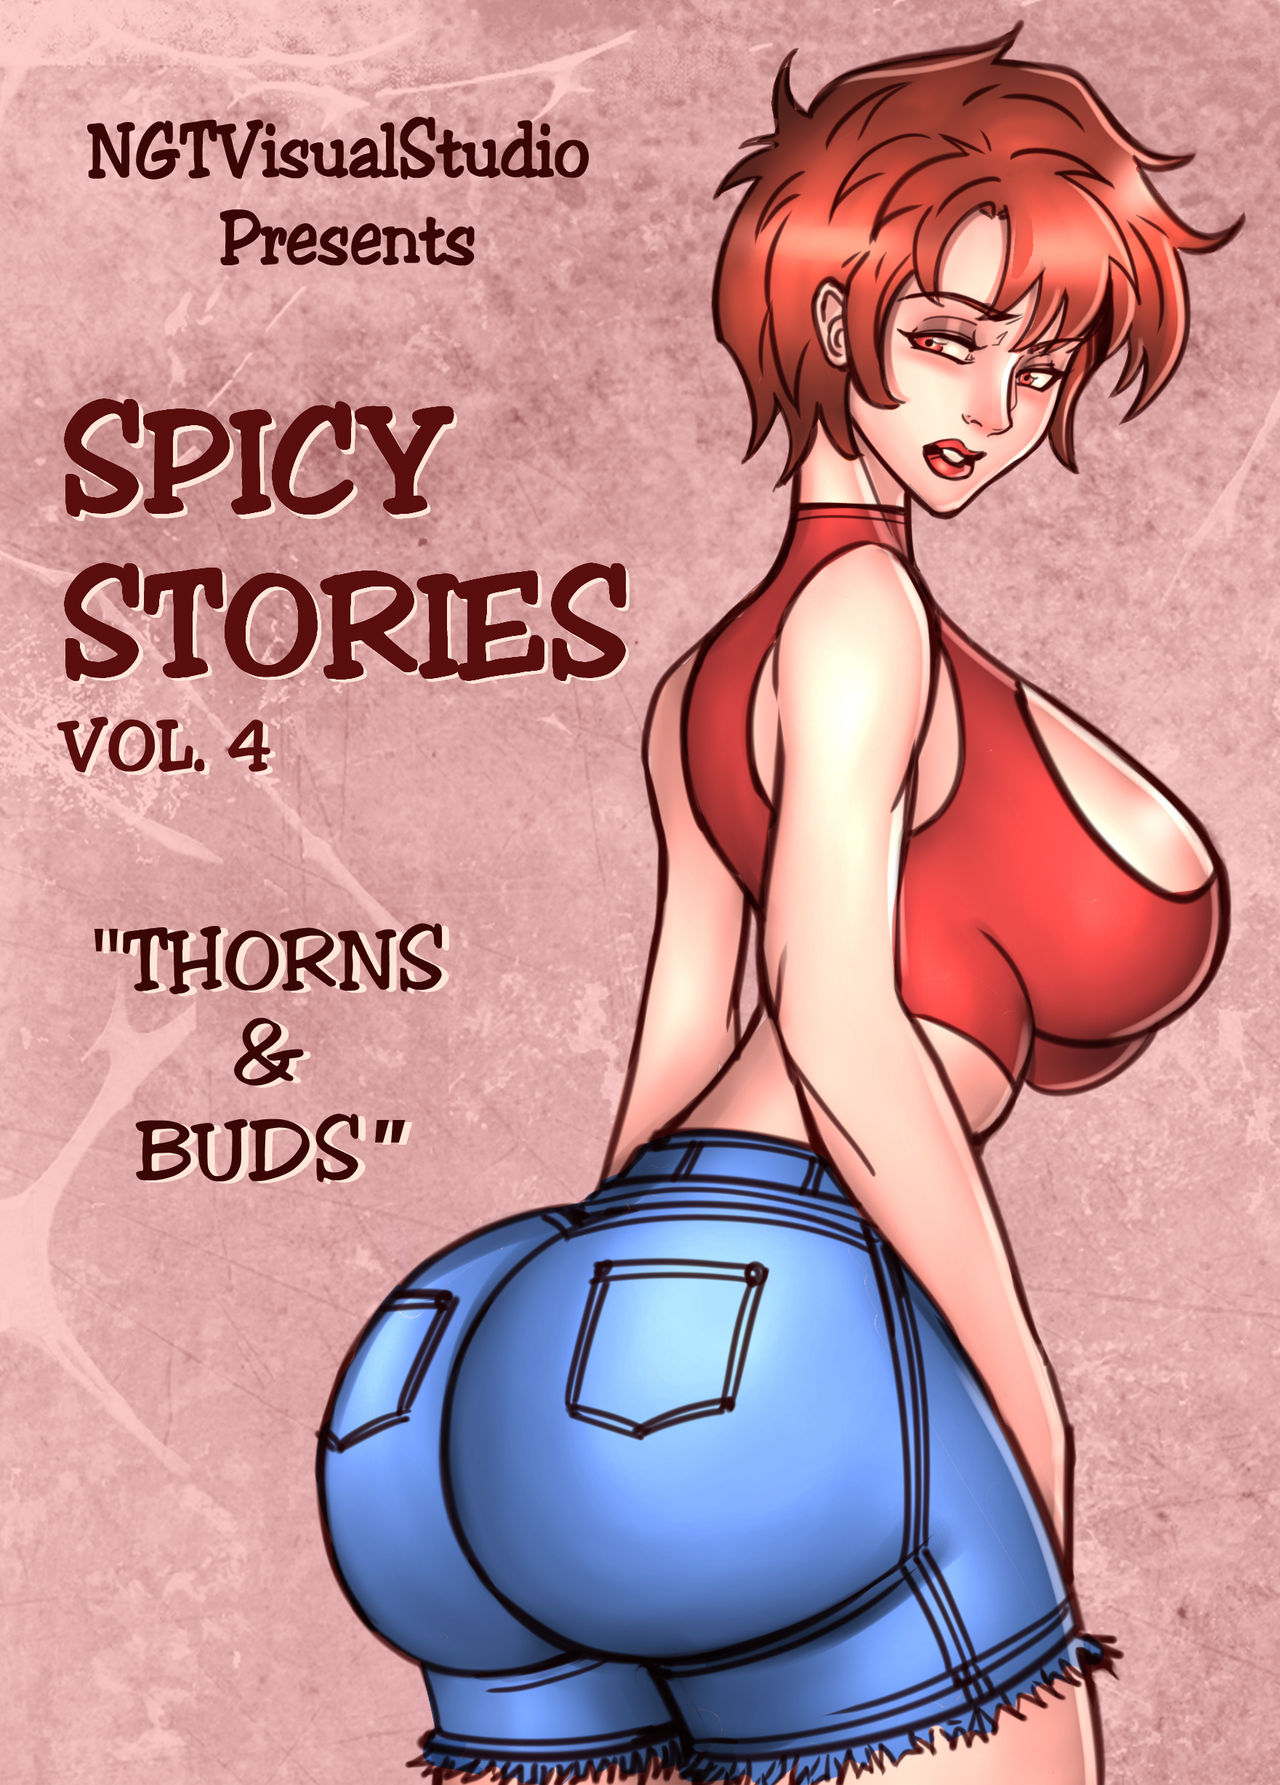 Spicy Stories 04.. Thorns Buds Ngtvisualstudio 01